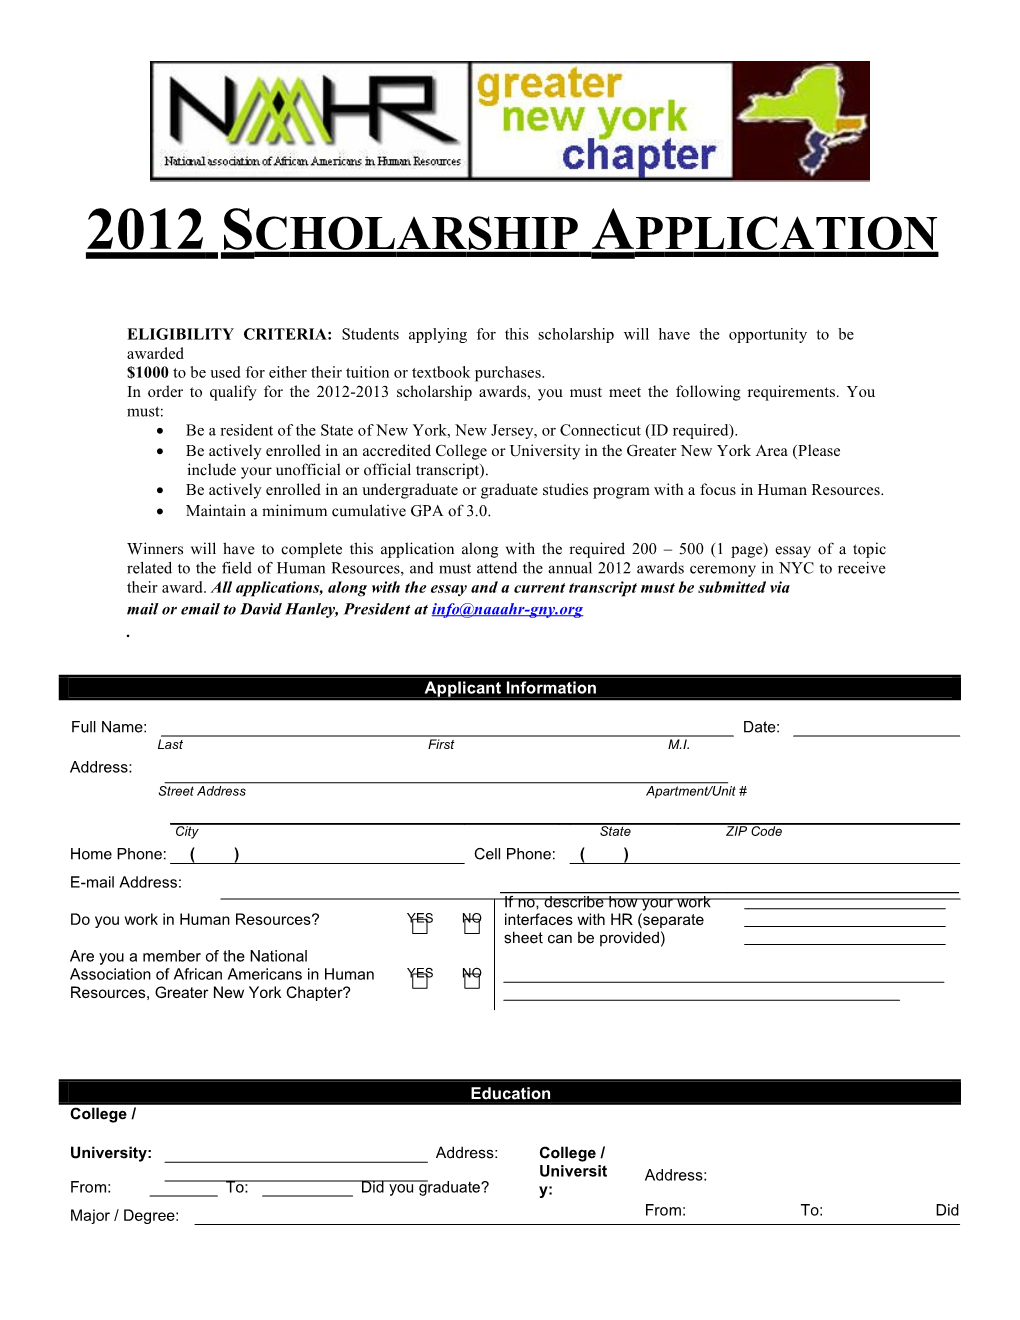 NAAAHR Scholarship Application 2009 WTR